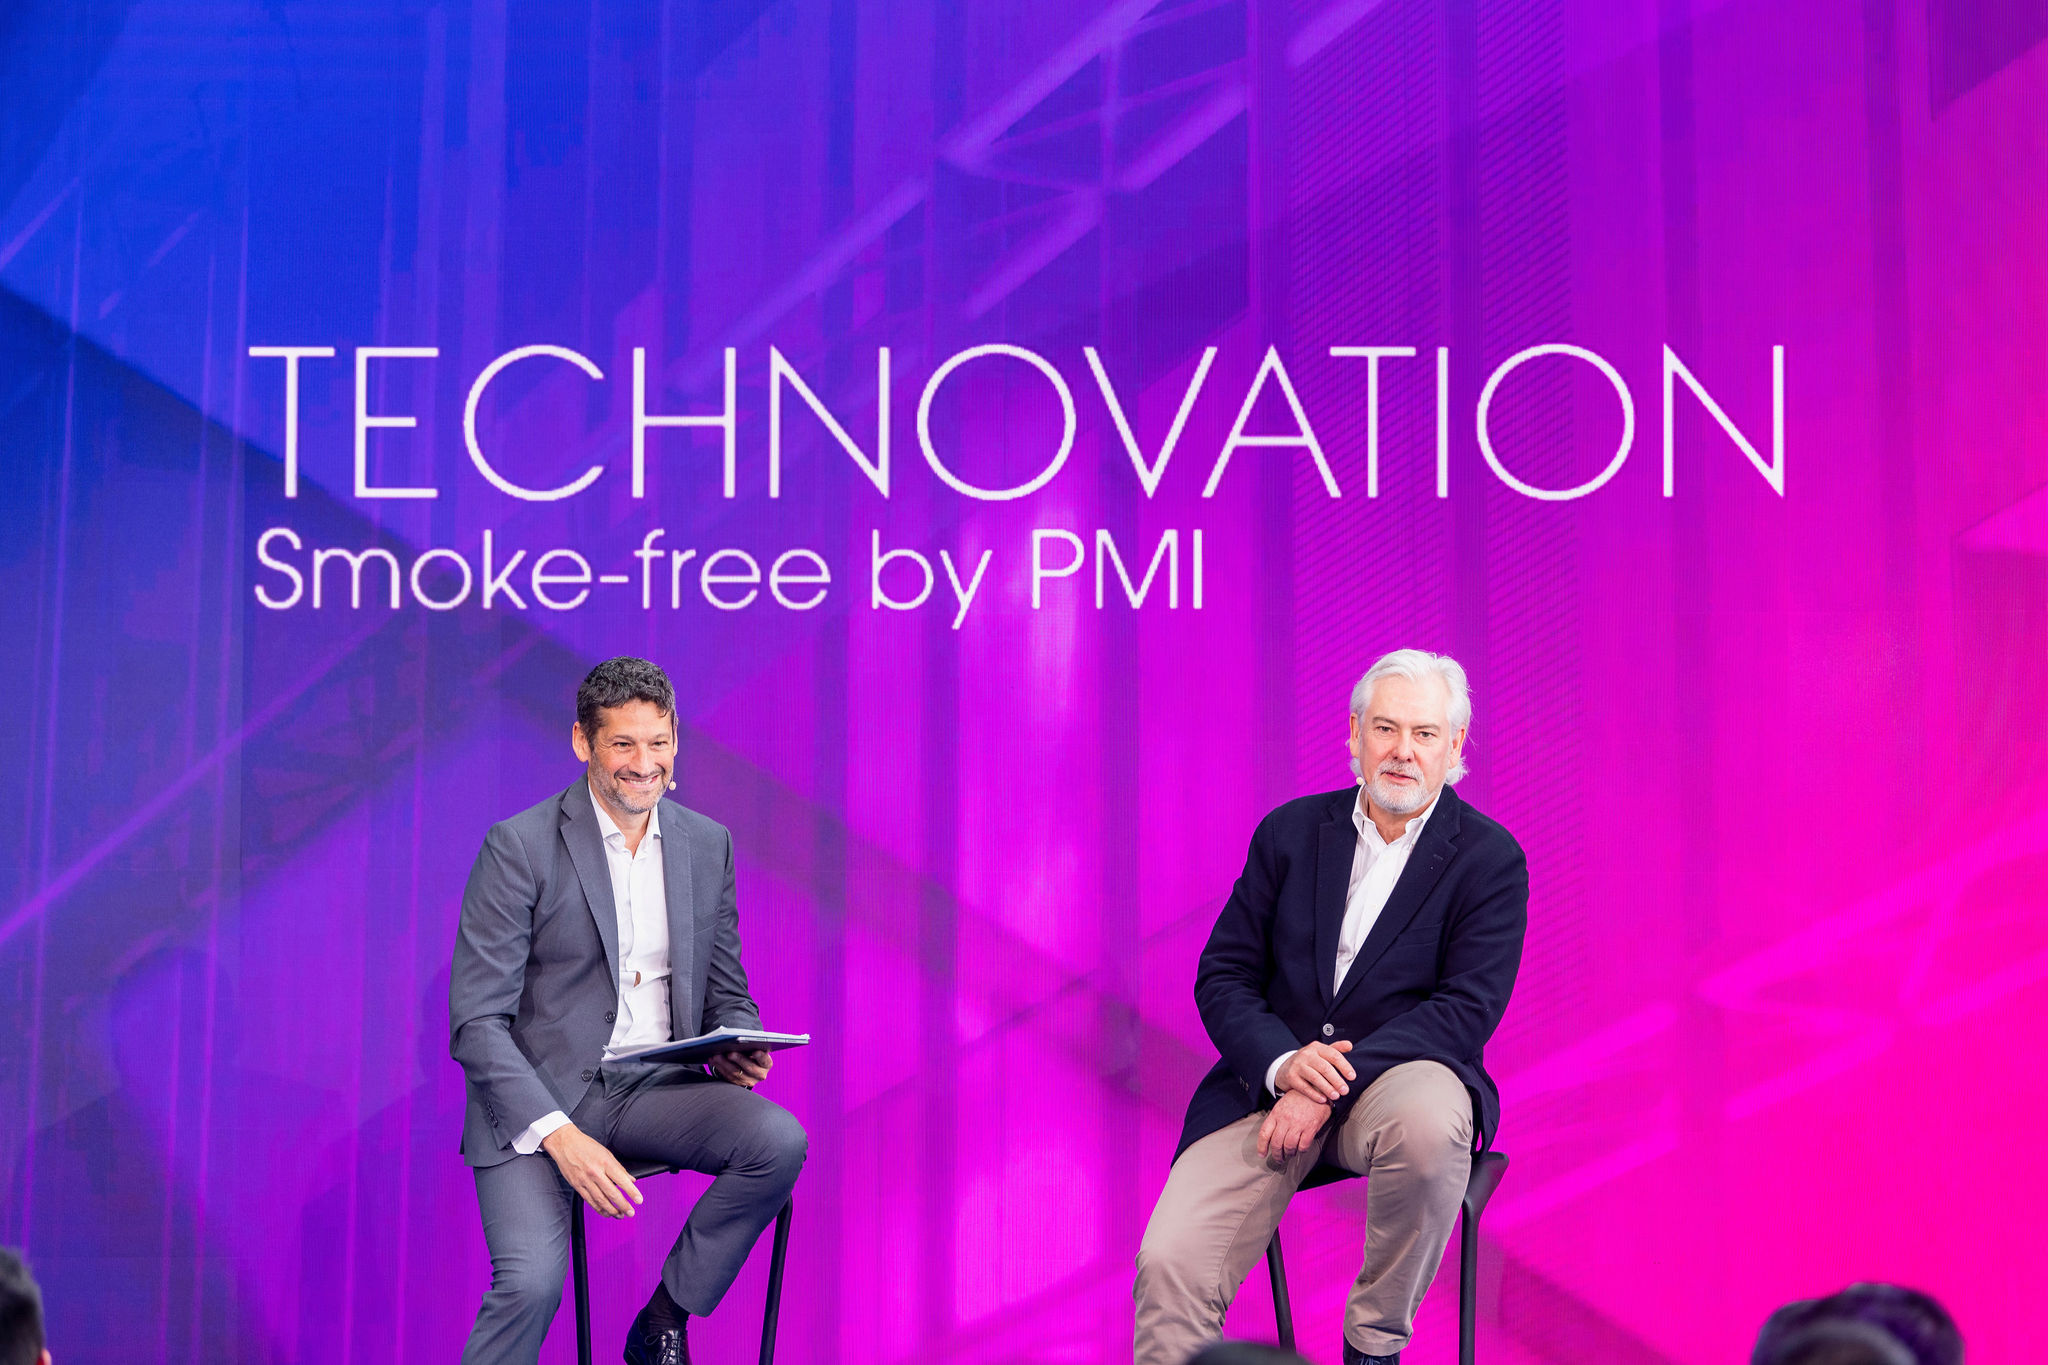 Technovation: To όραμα της Philip Morris International για μια smoke free εποχή περνάει από το “The Cube”